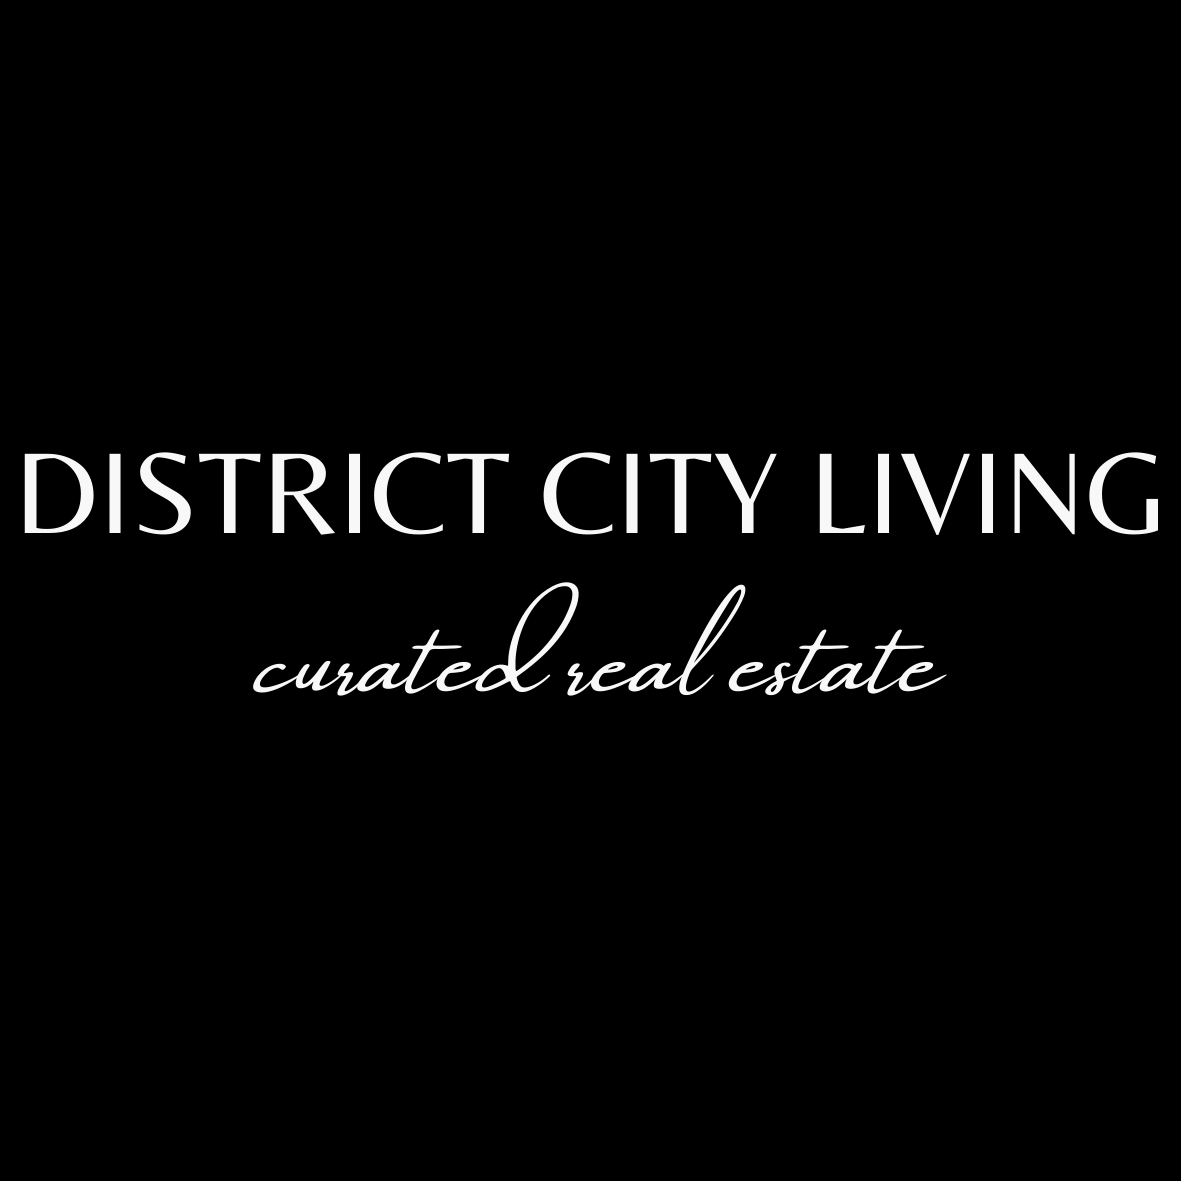 DistrictCityLiving.com